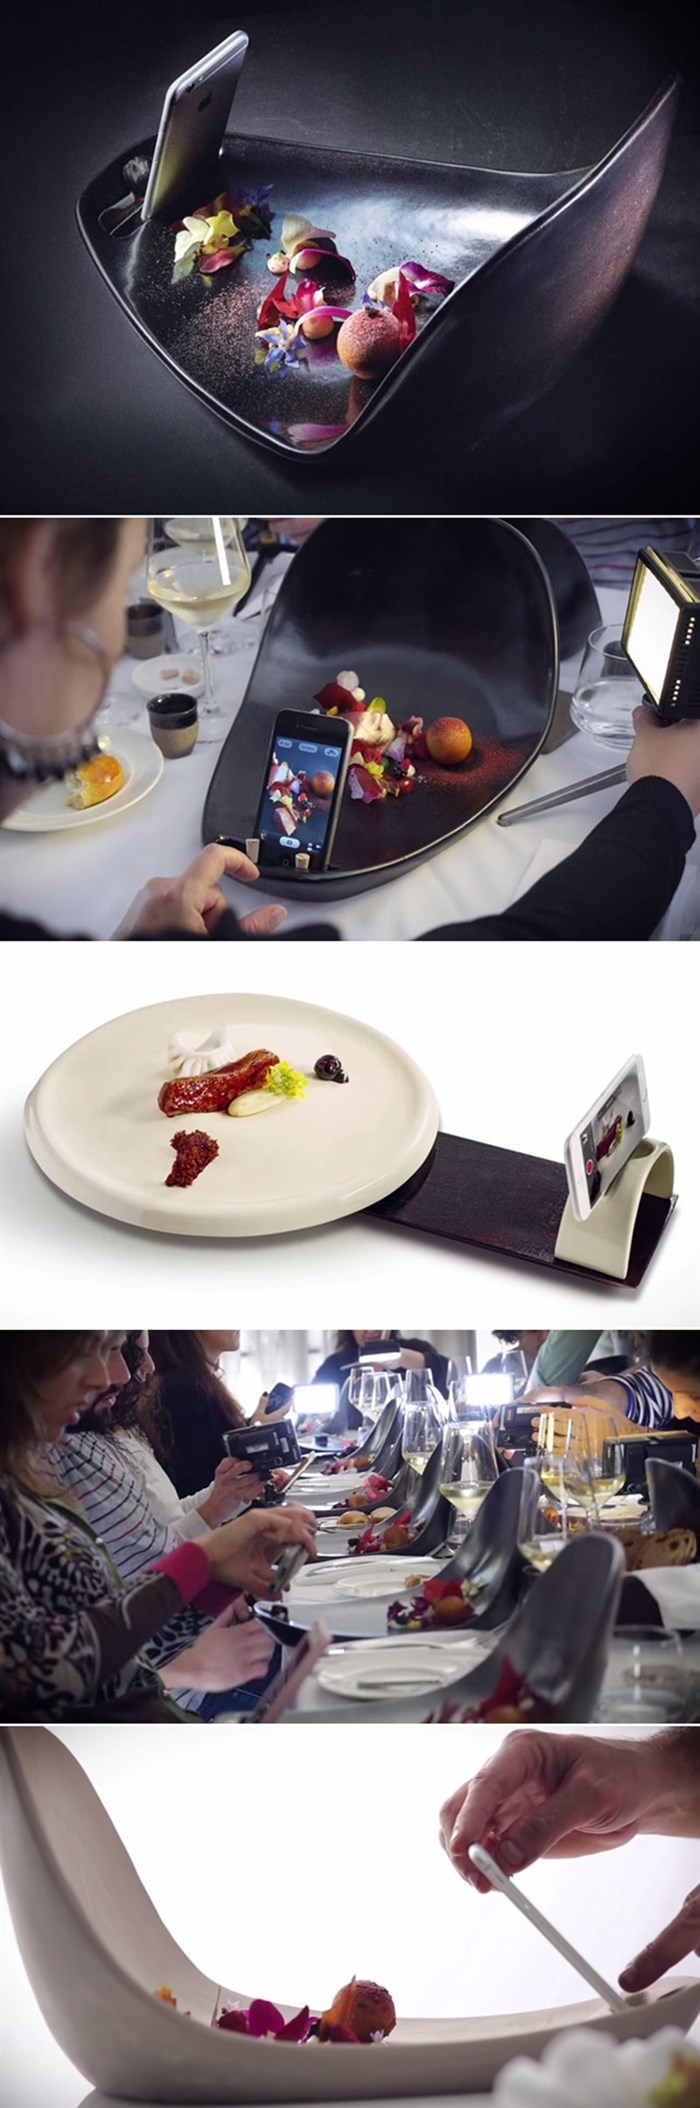 Restoran dizajnirao tanjure za Instagramovce